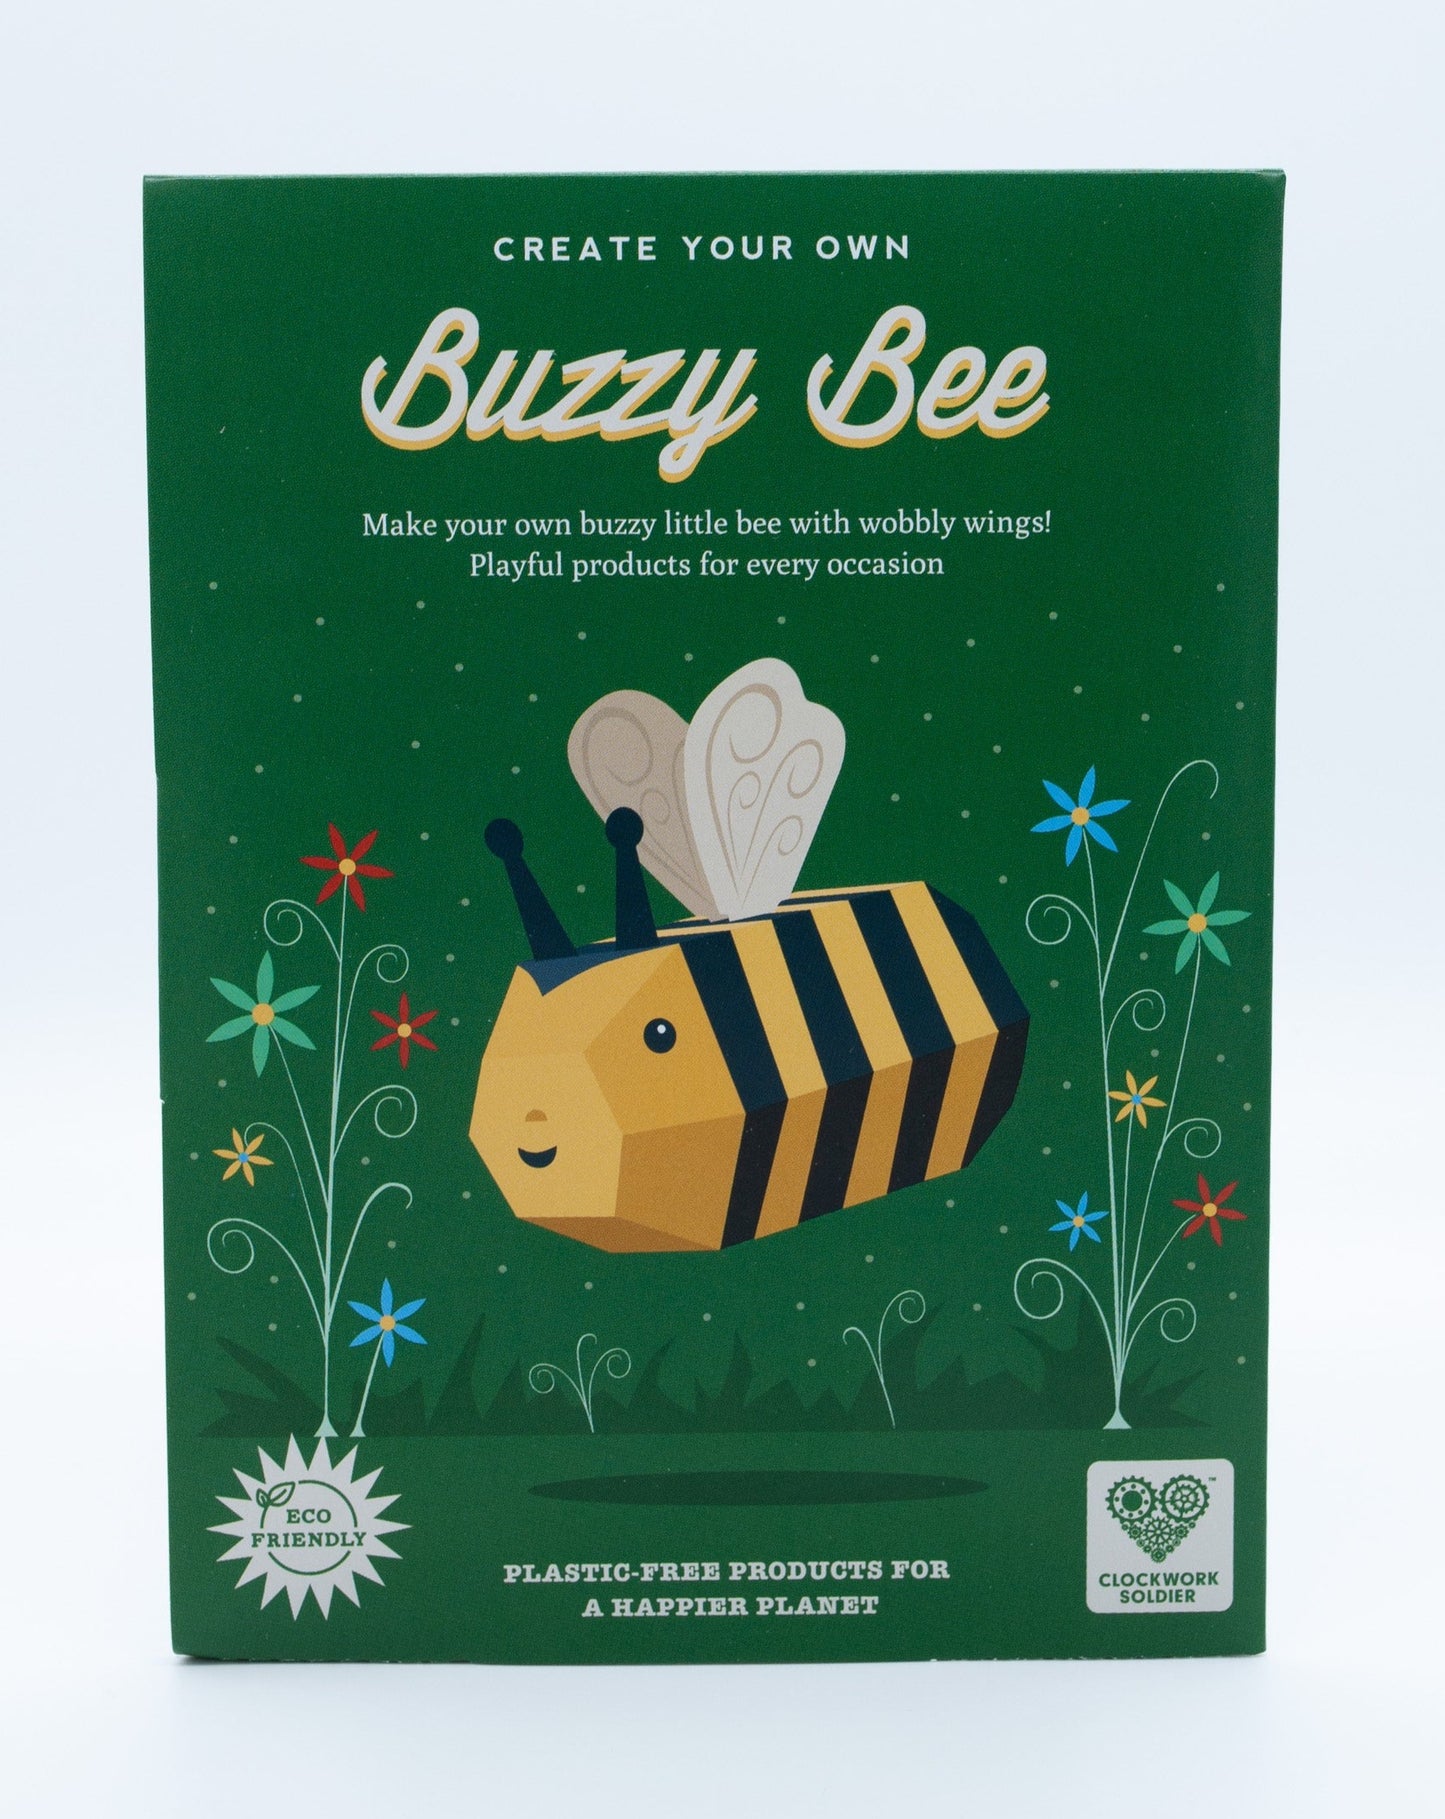 Clockwork Soldier-Create Your Own Buzzy Bee